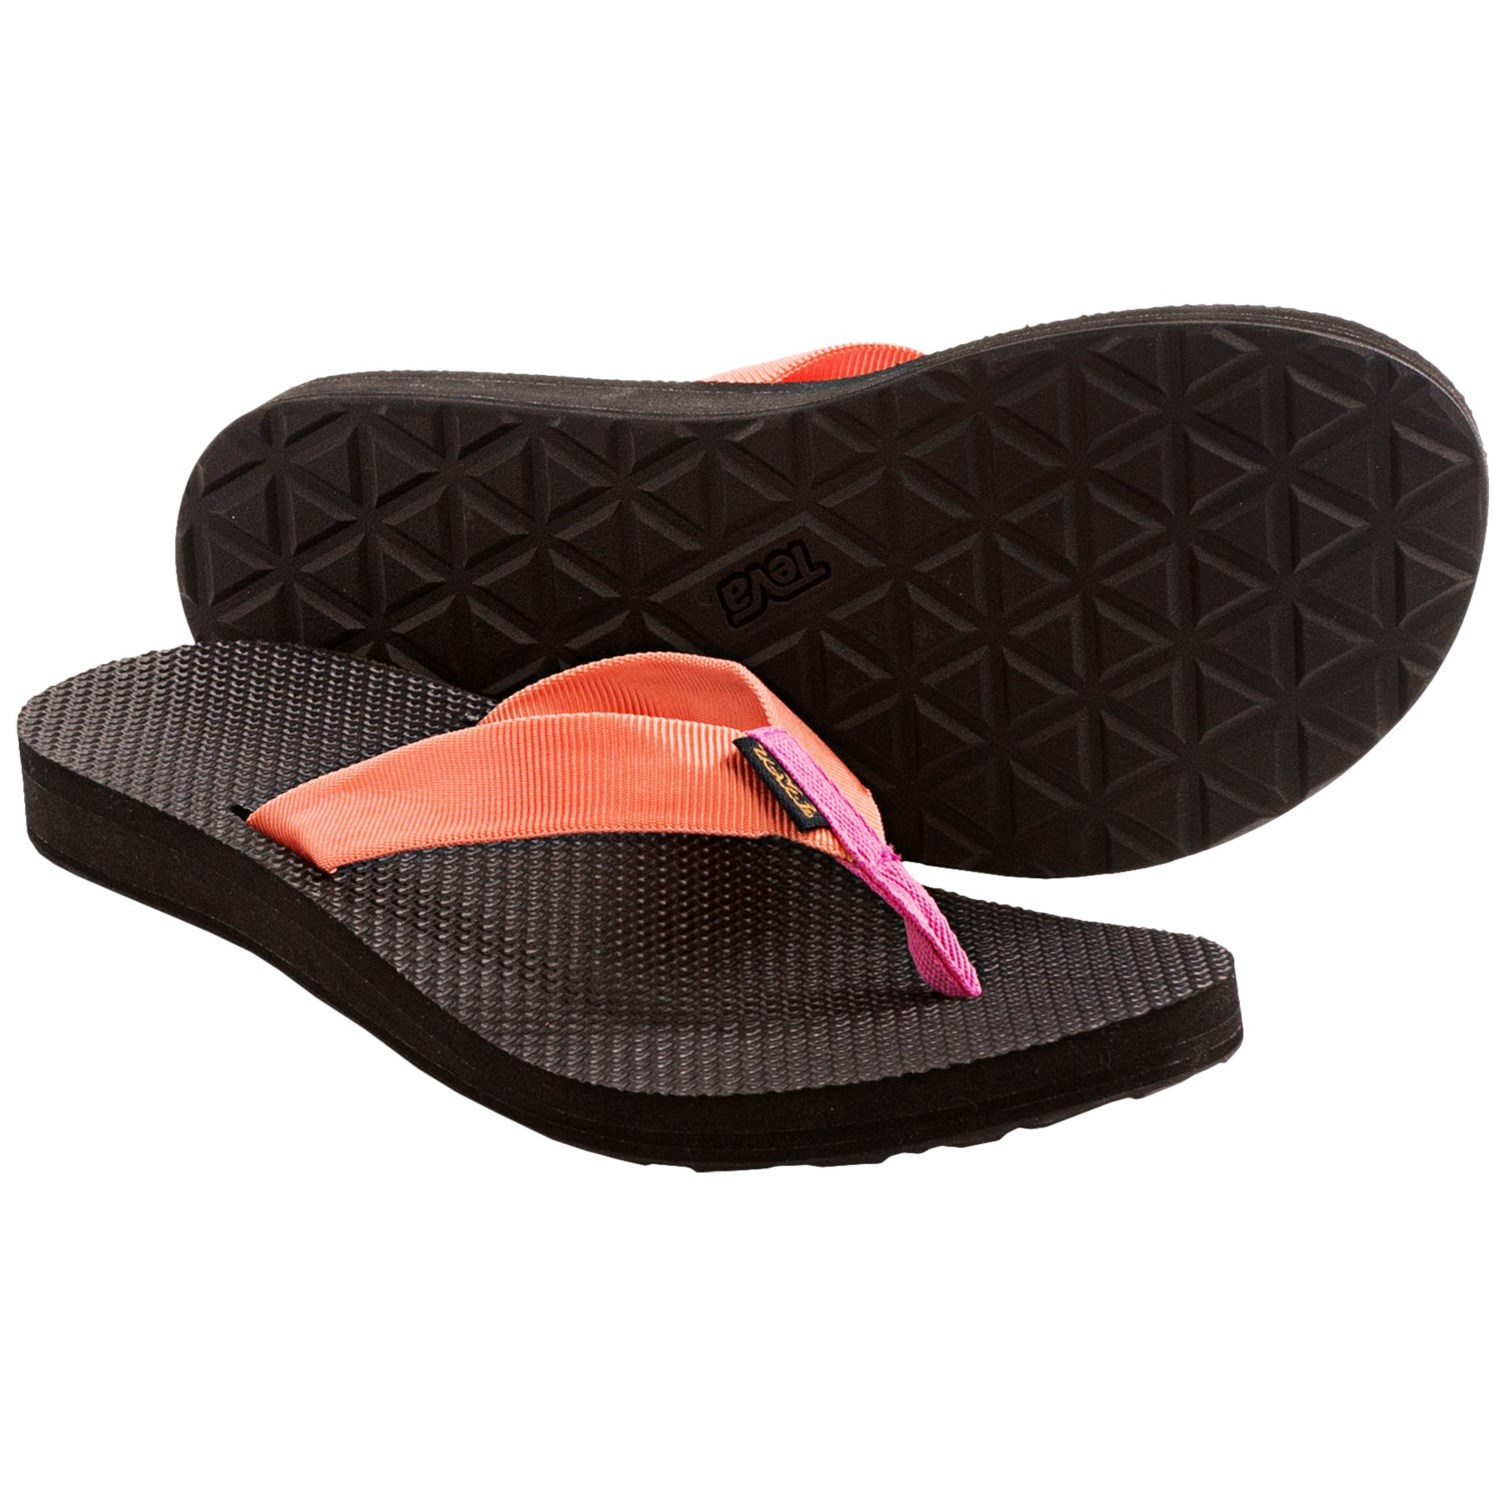 Teva Original Sandals - Flip-Flops (For Women) - Save 44%